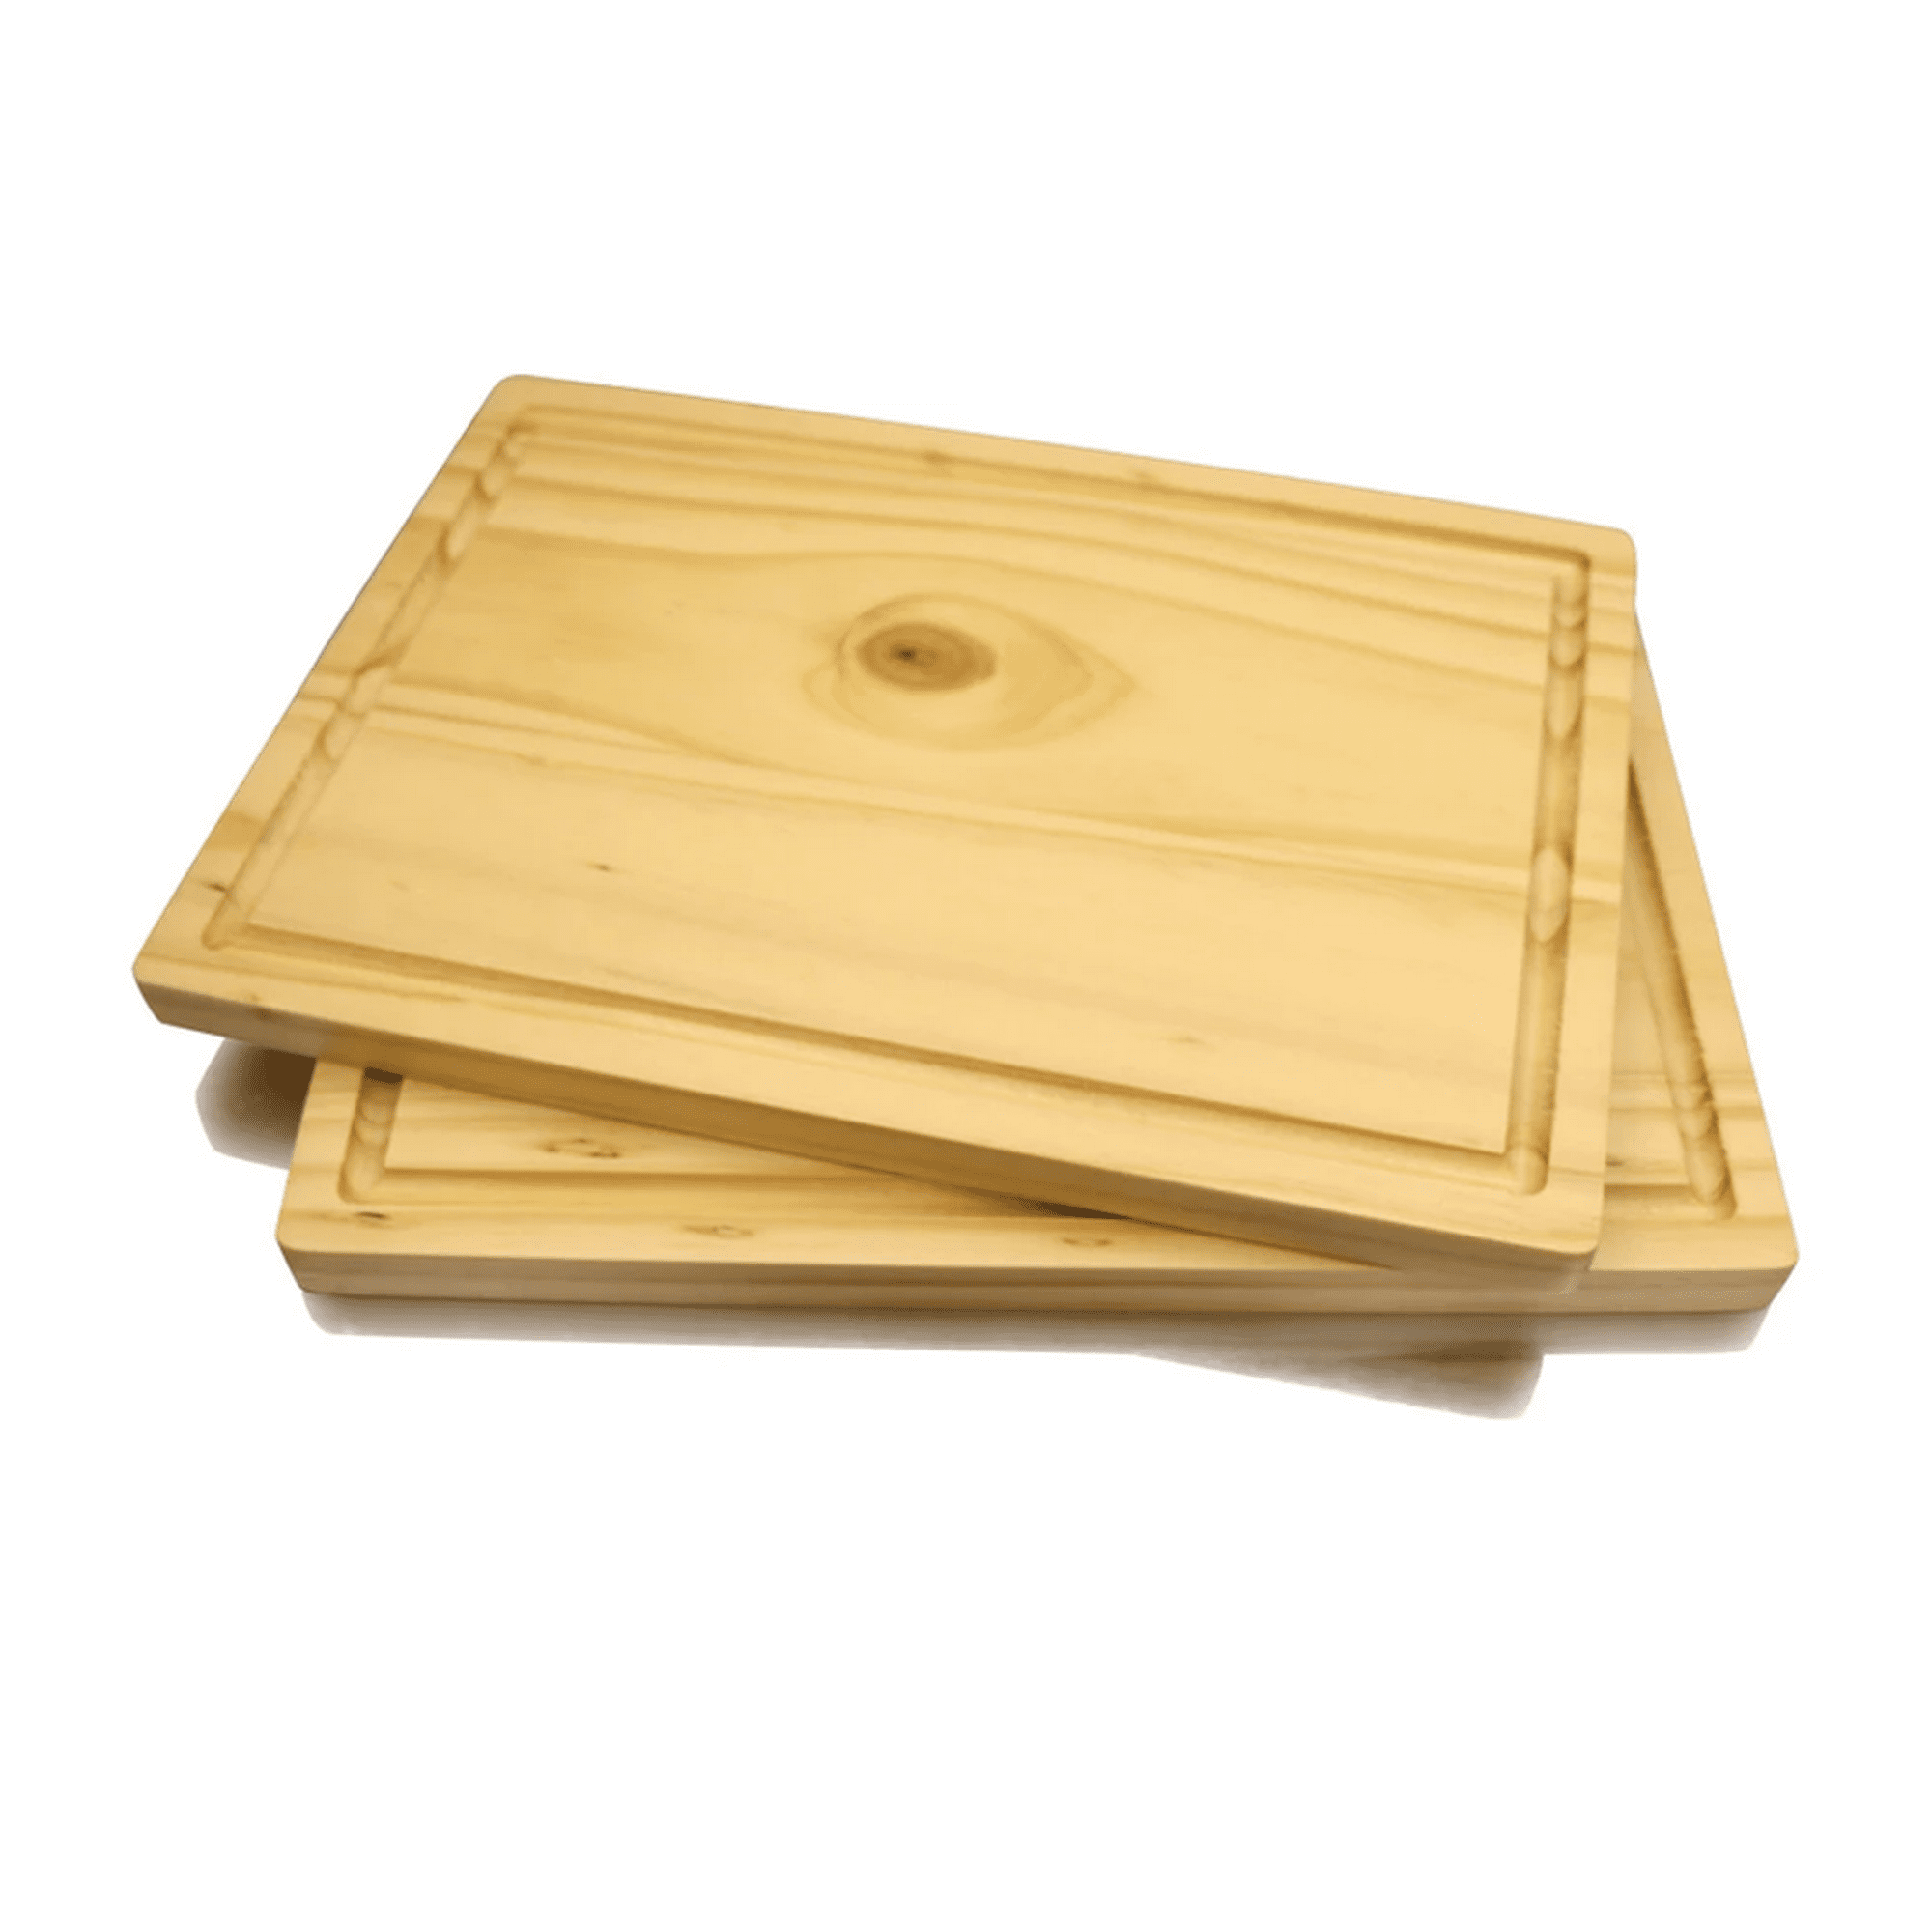  Treen Art Juego de 2 tablas de cortar de madera con forma de  limón para cocina, 14.5 pulgadas de largo x 10 pulgadas de ancho, tablas de  cortar para servir como